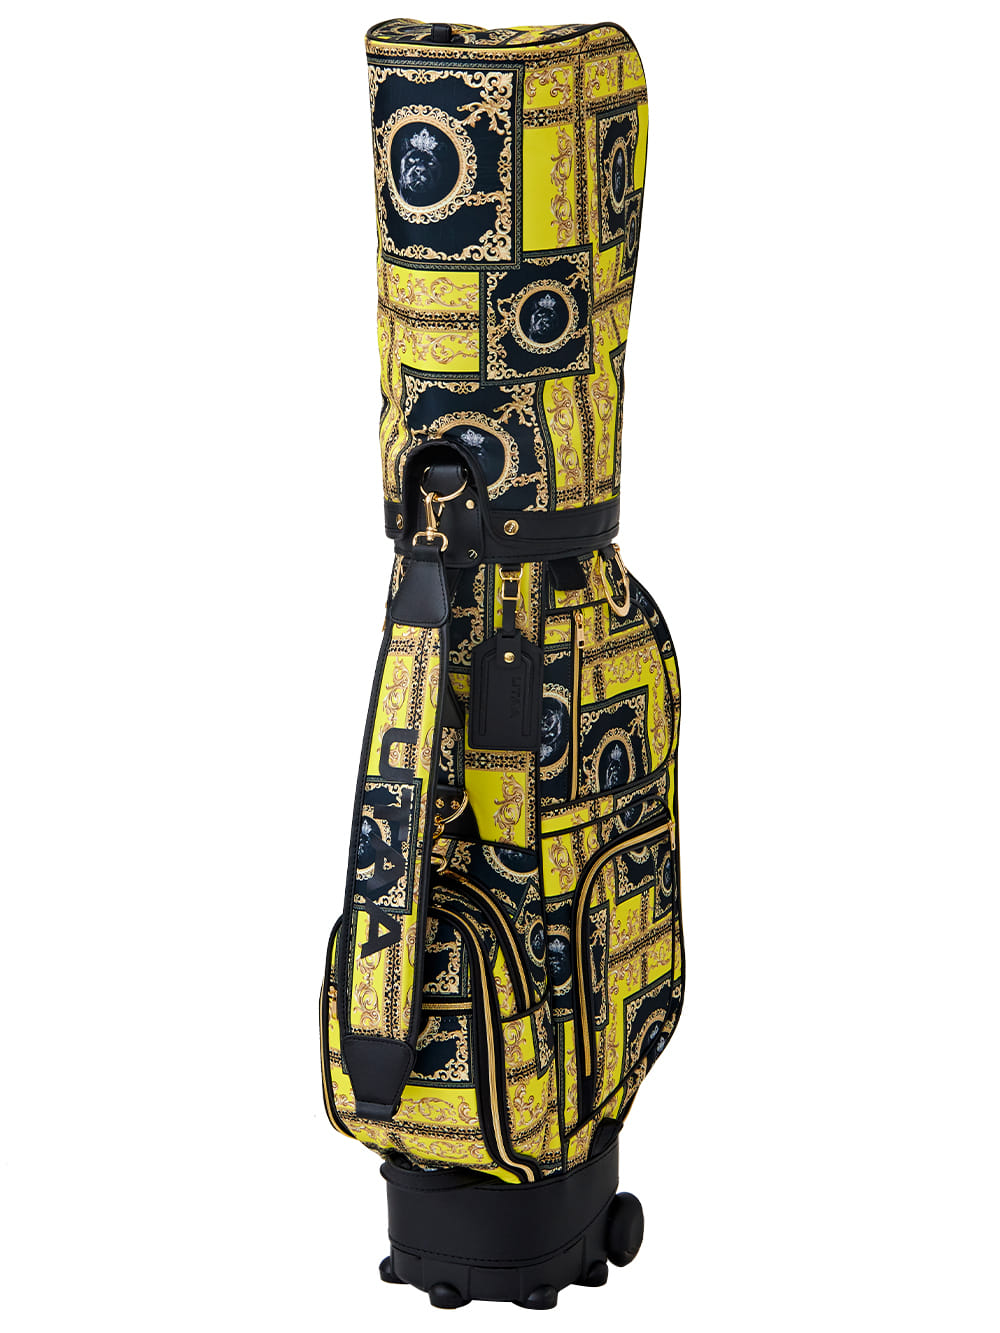 UTAA Dazzle Baroque Caddie Bag : Yellow (UE0GDF300YE)